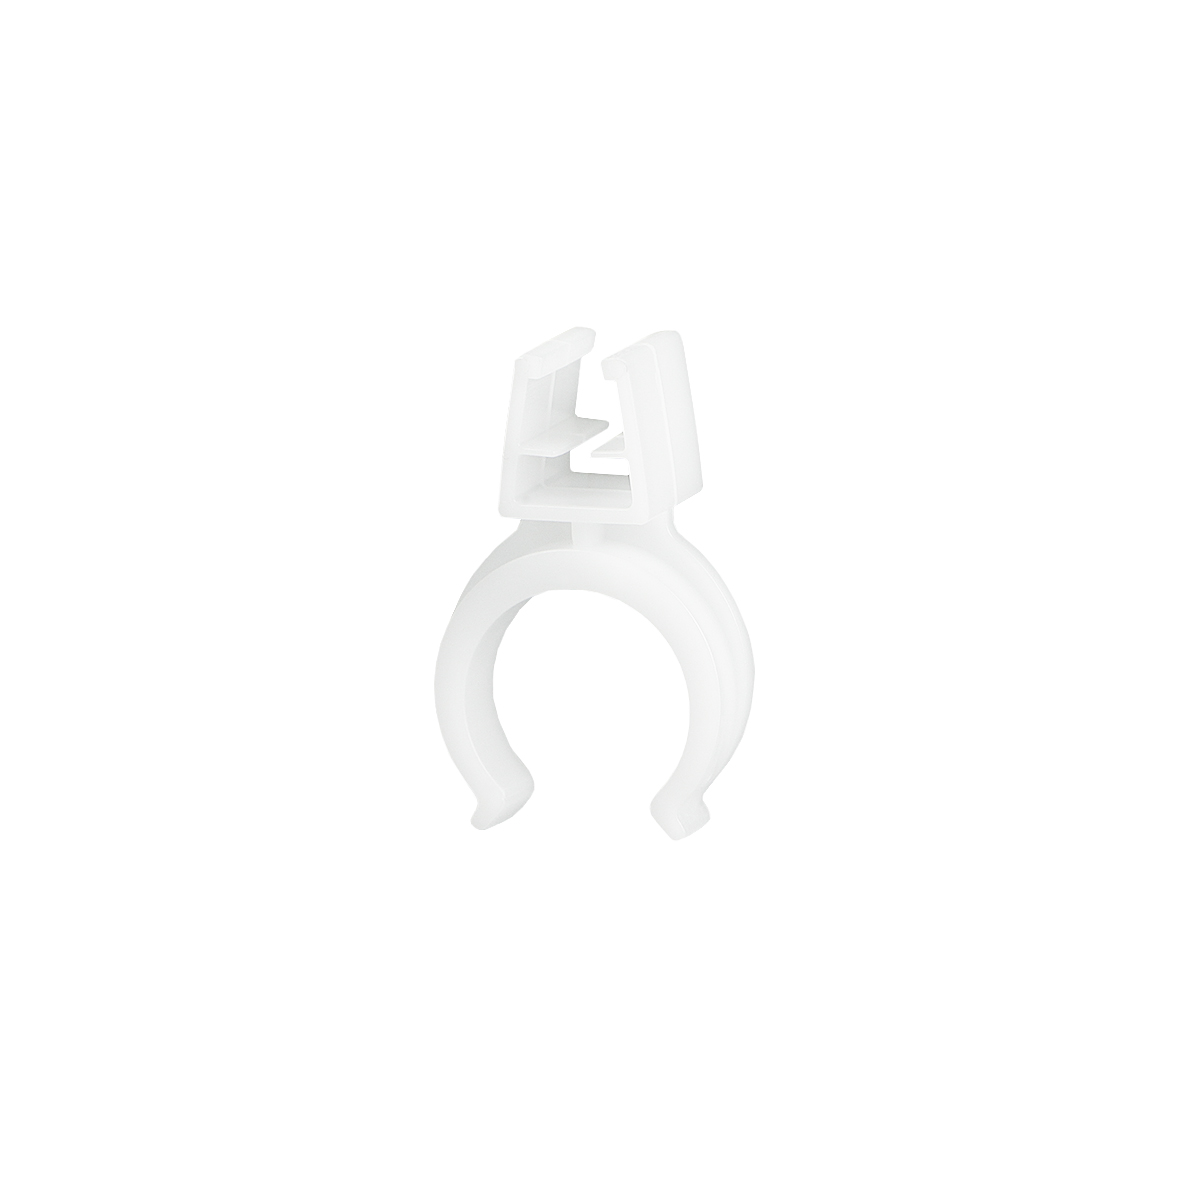 Клипса JOKER CLIP, цвет белый, диаметр 22-25 мм